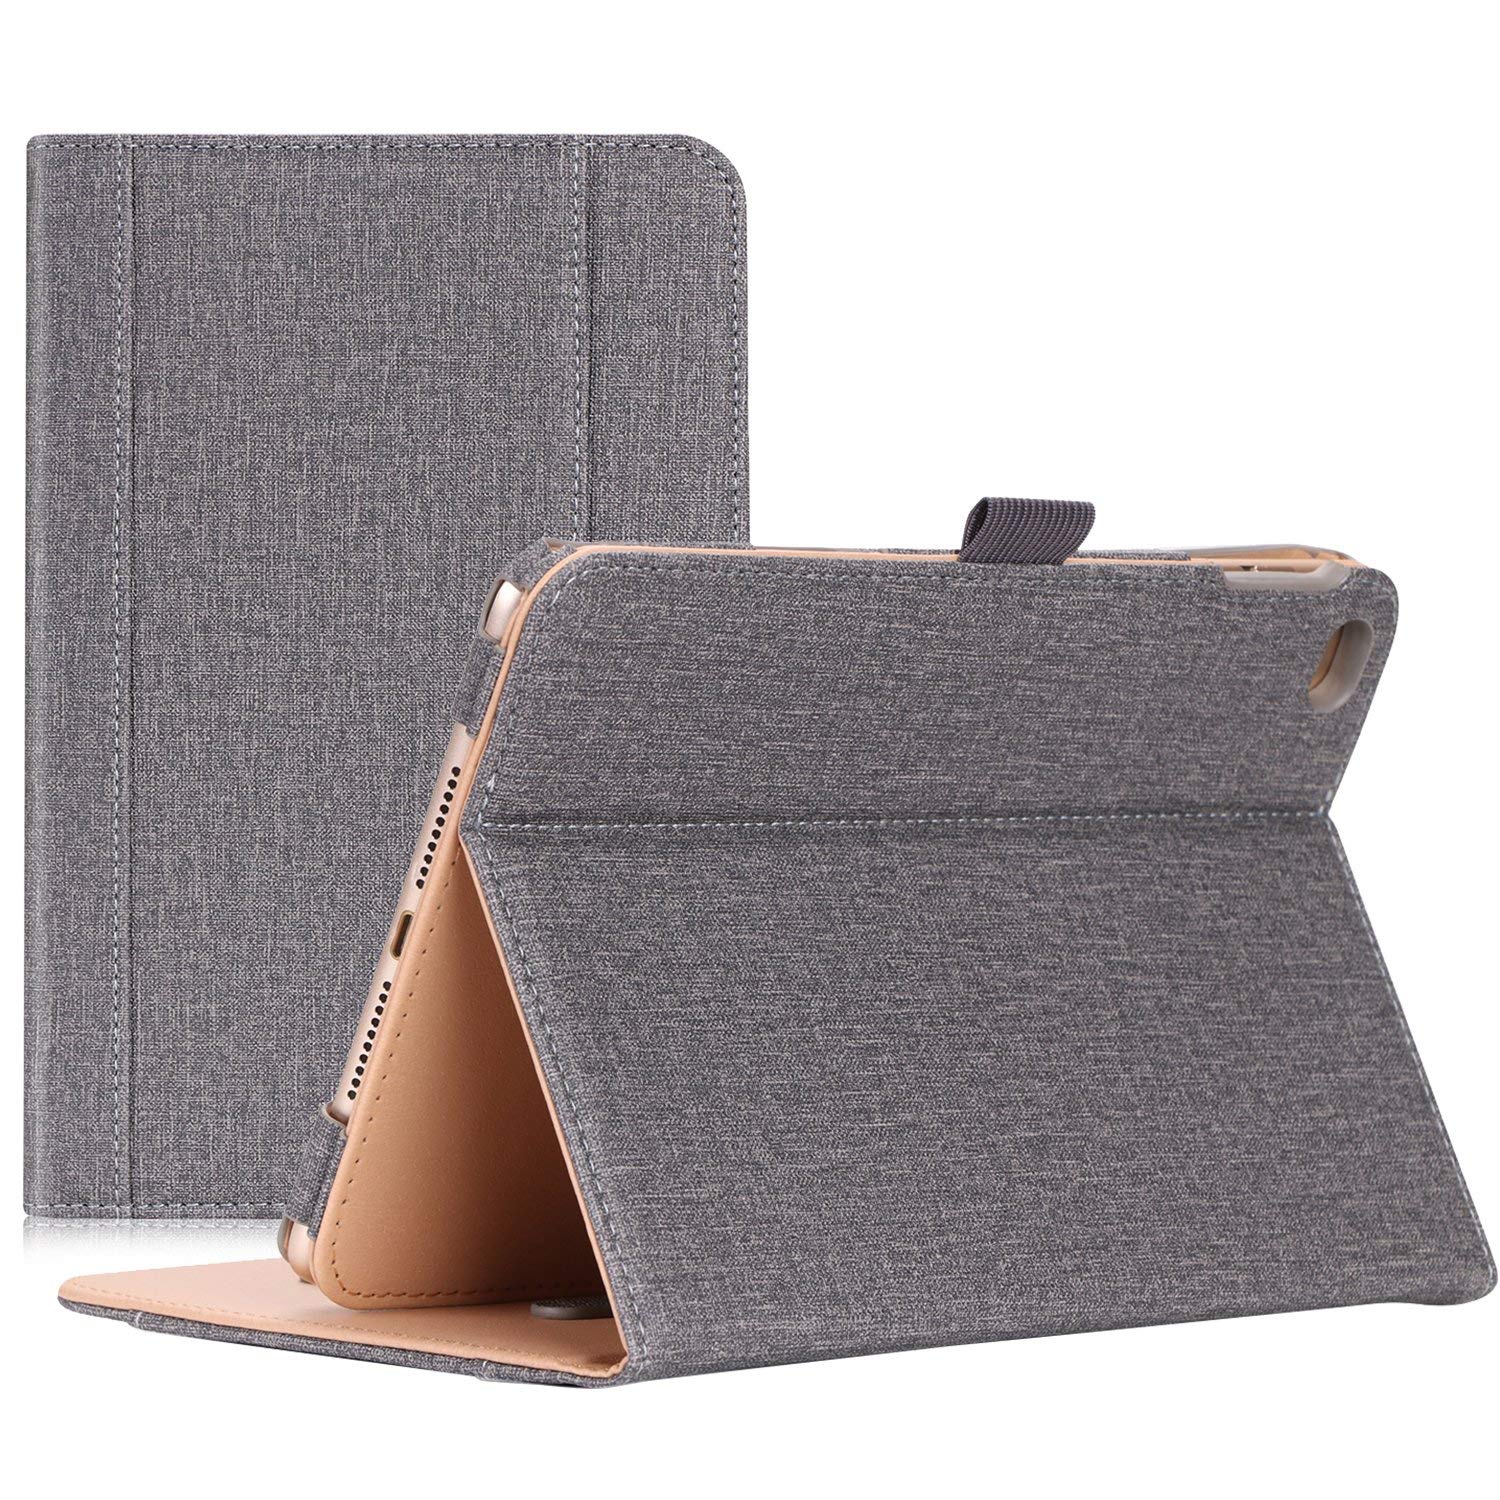 ProCase iPad mini Folio Case Cover